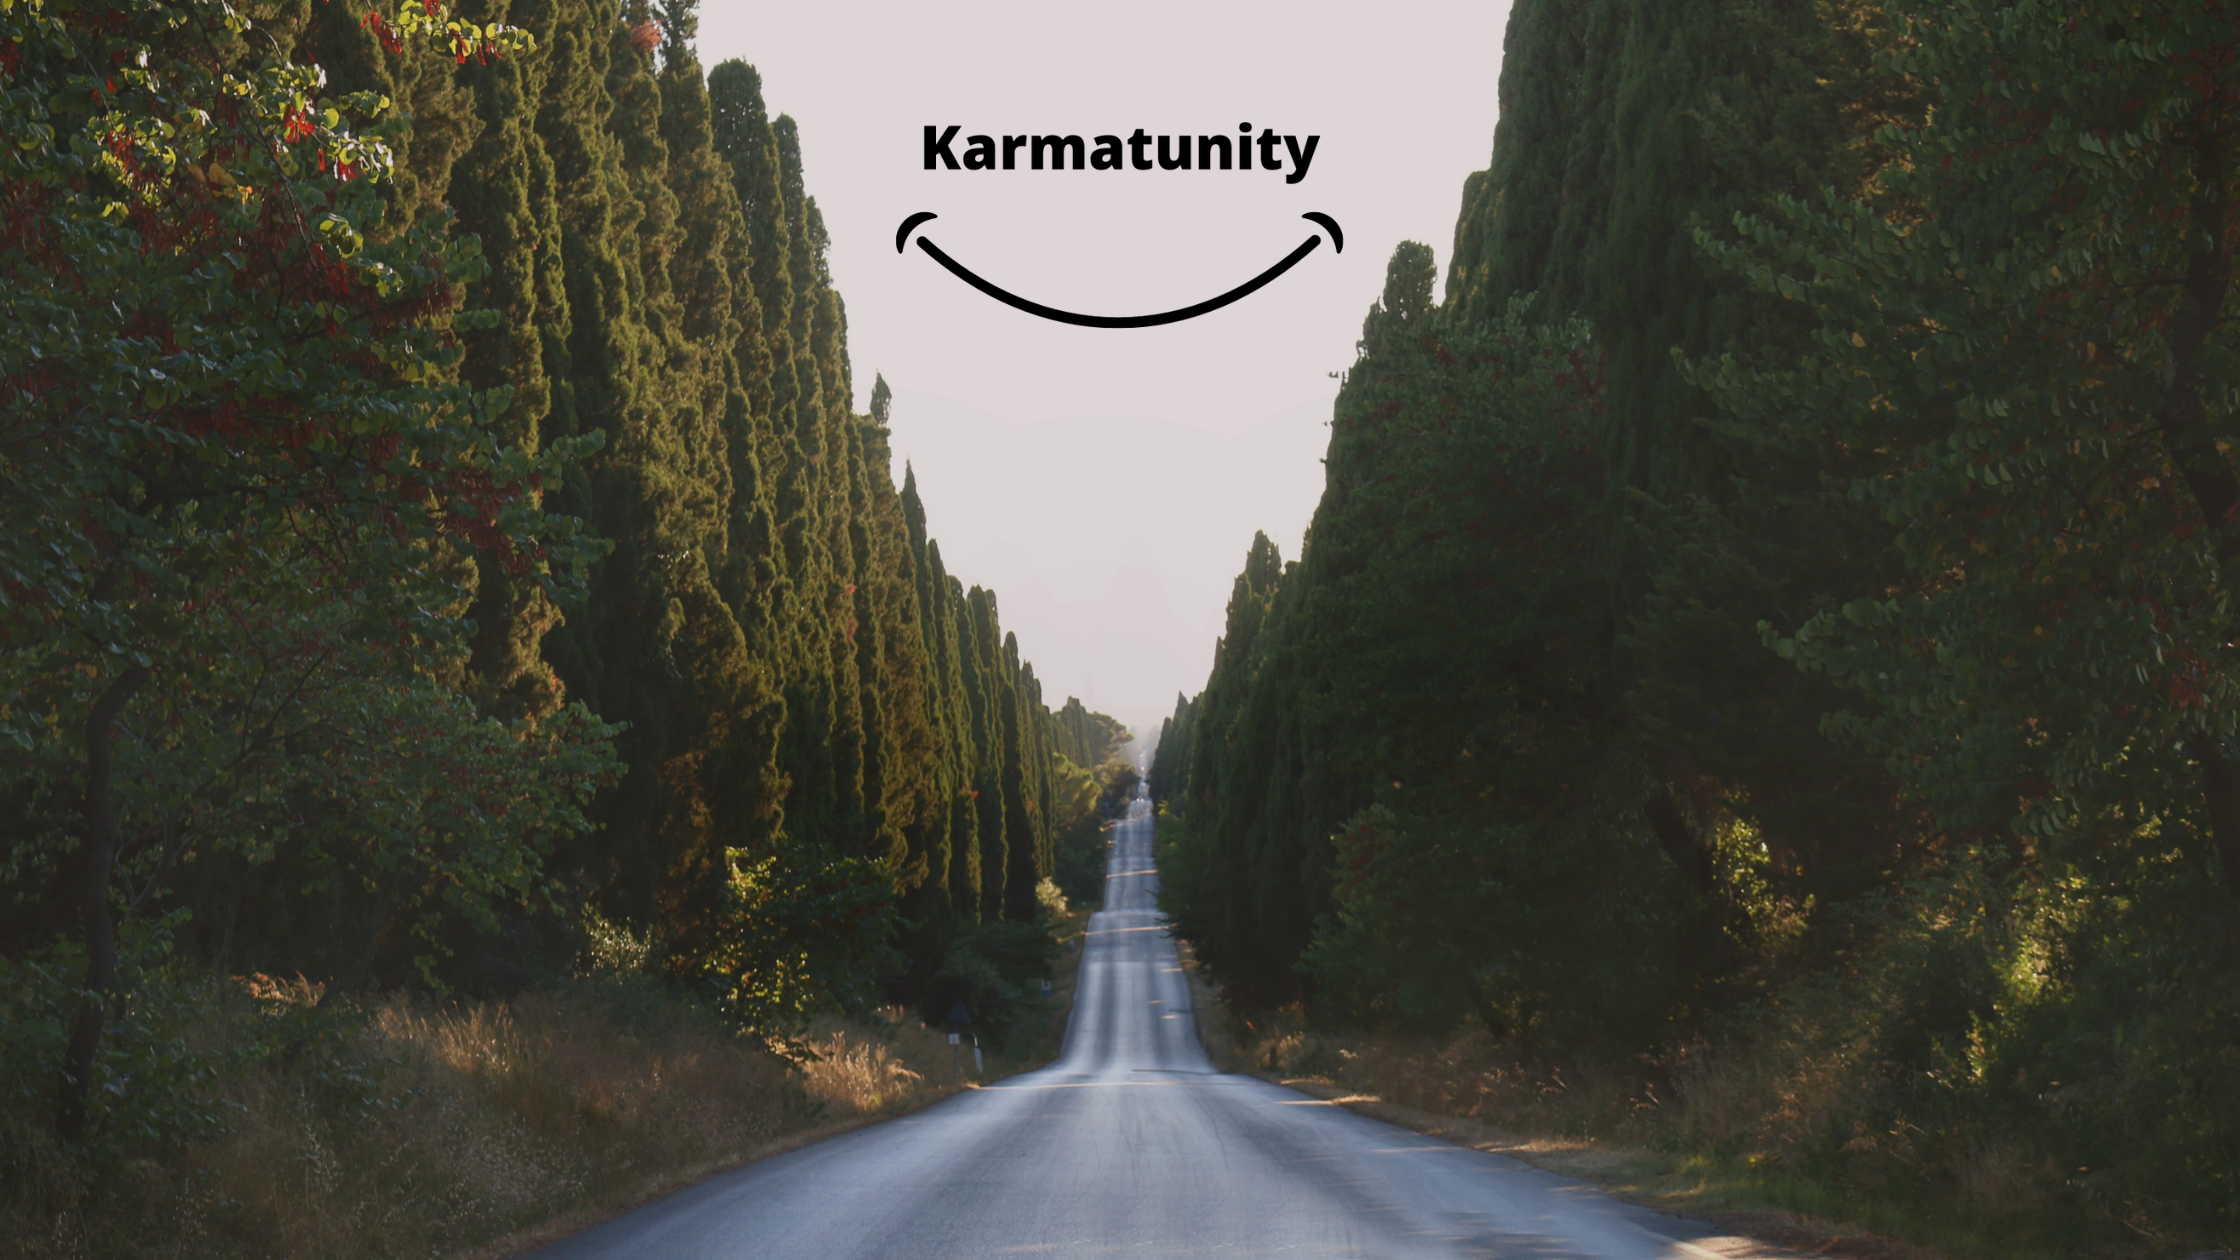 Hello and welcome to Karmatunity!